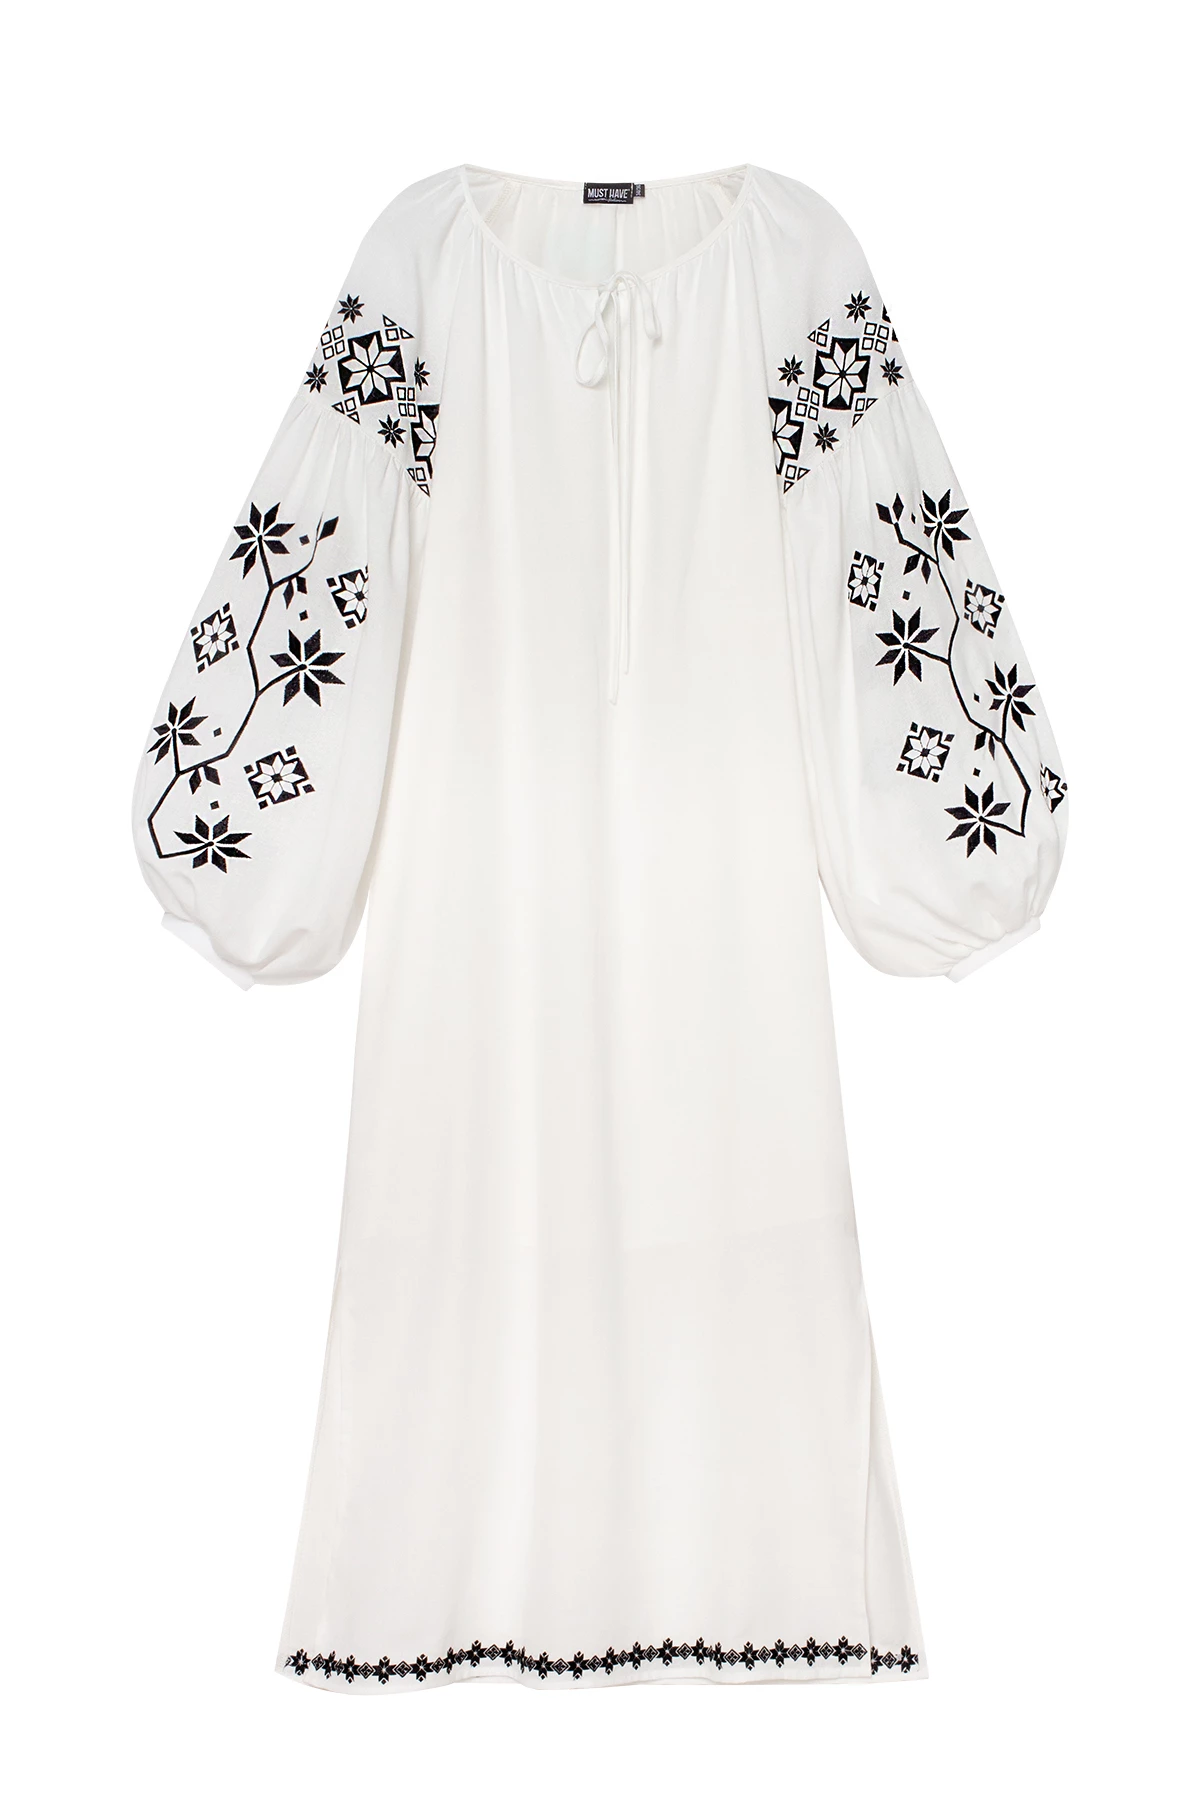 Milky linen vyshyvanka dress with Virgin Mary star embroidery, photo 13